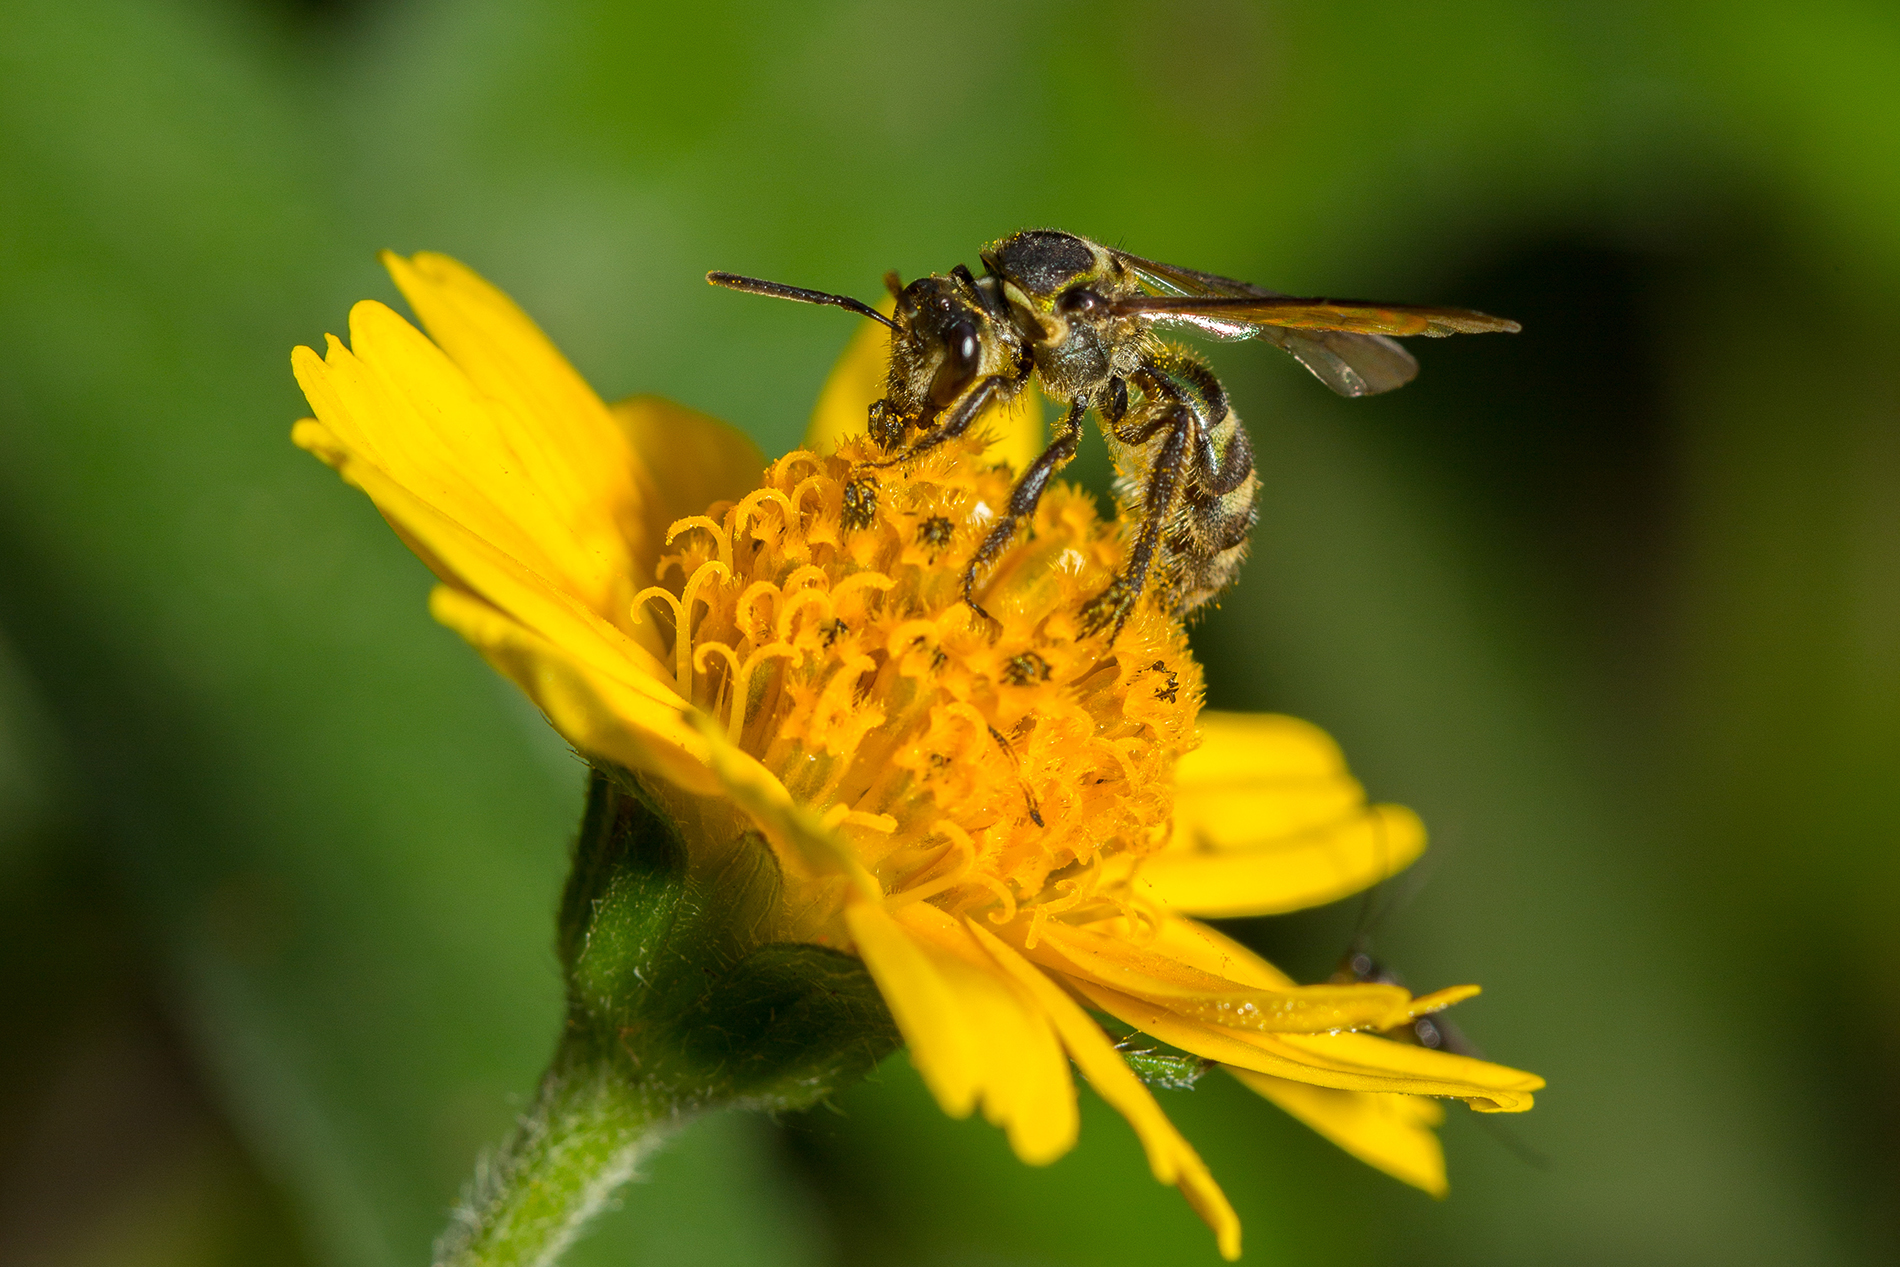 Yellow flowers on honey bees 53368 - Flowers photo - Flowers